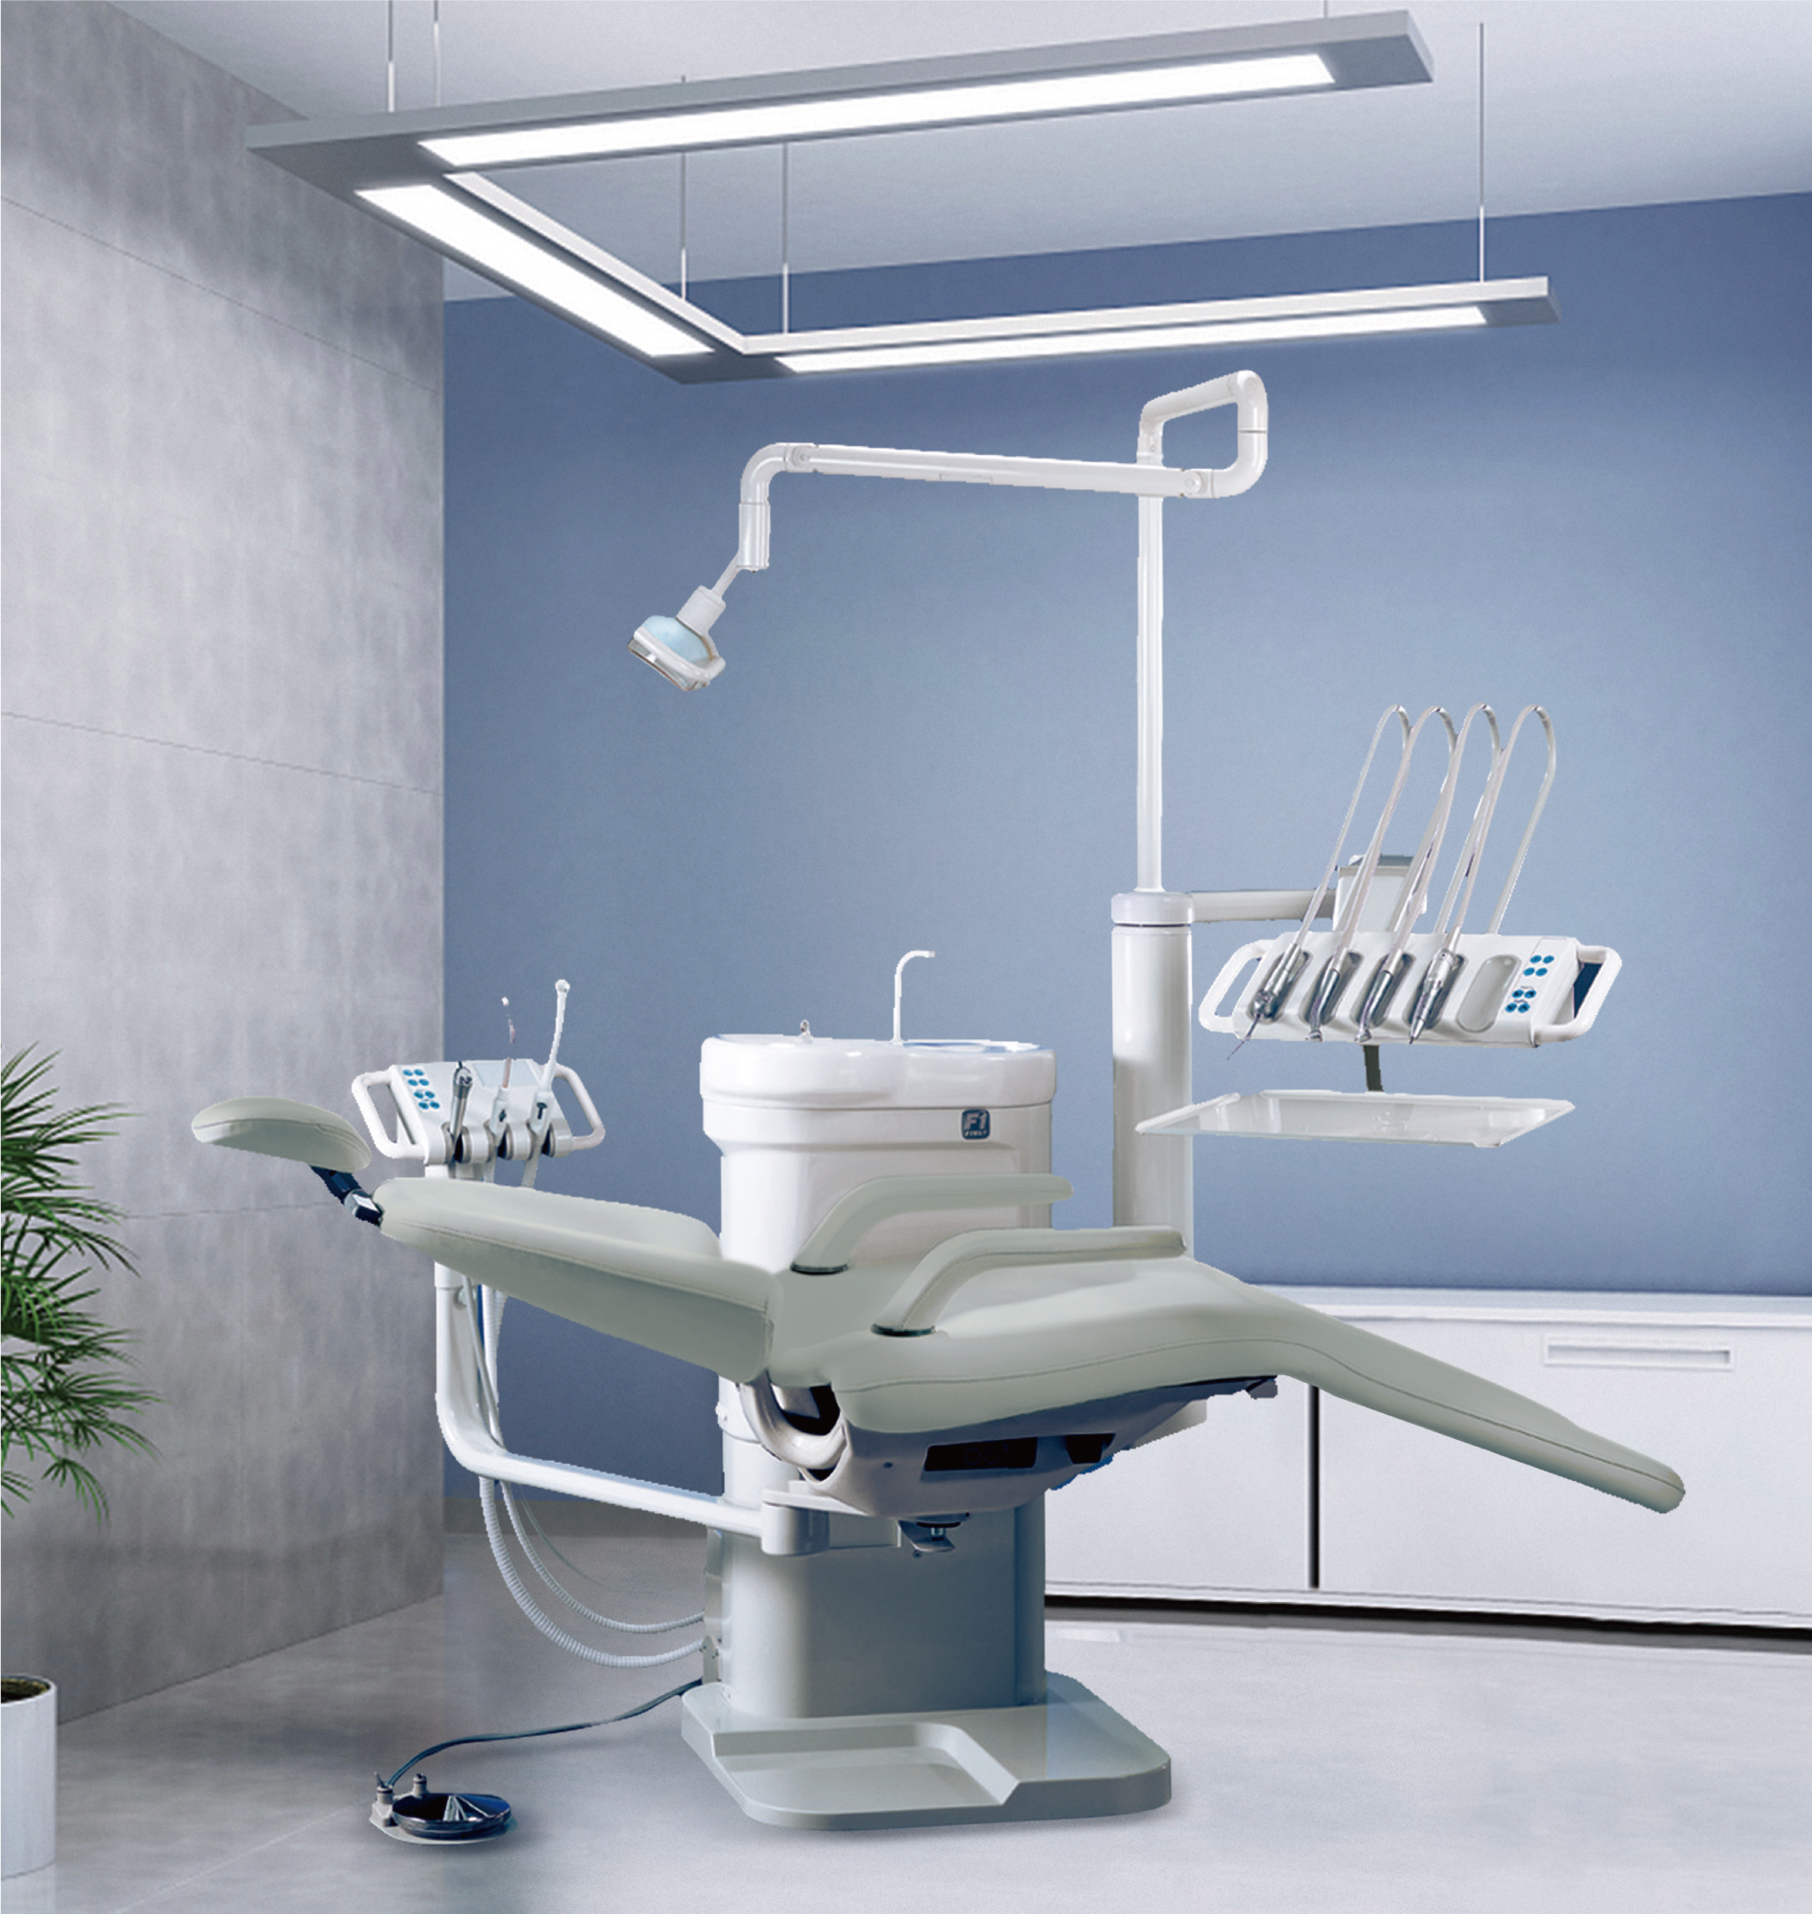 Machine-mounted dental unit